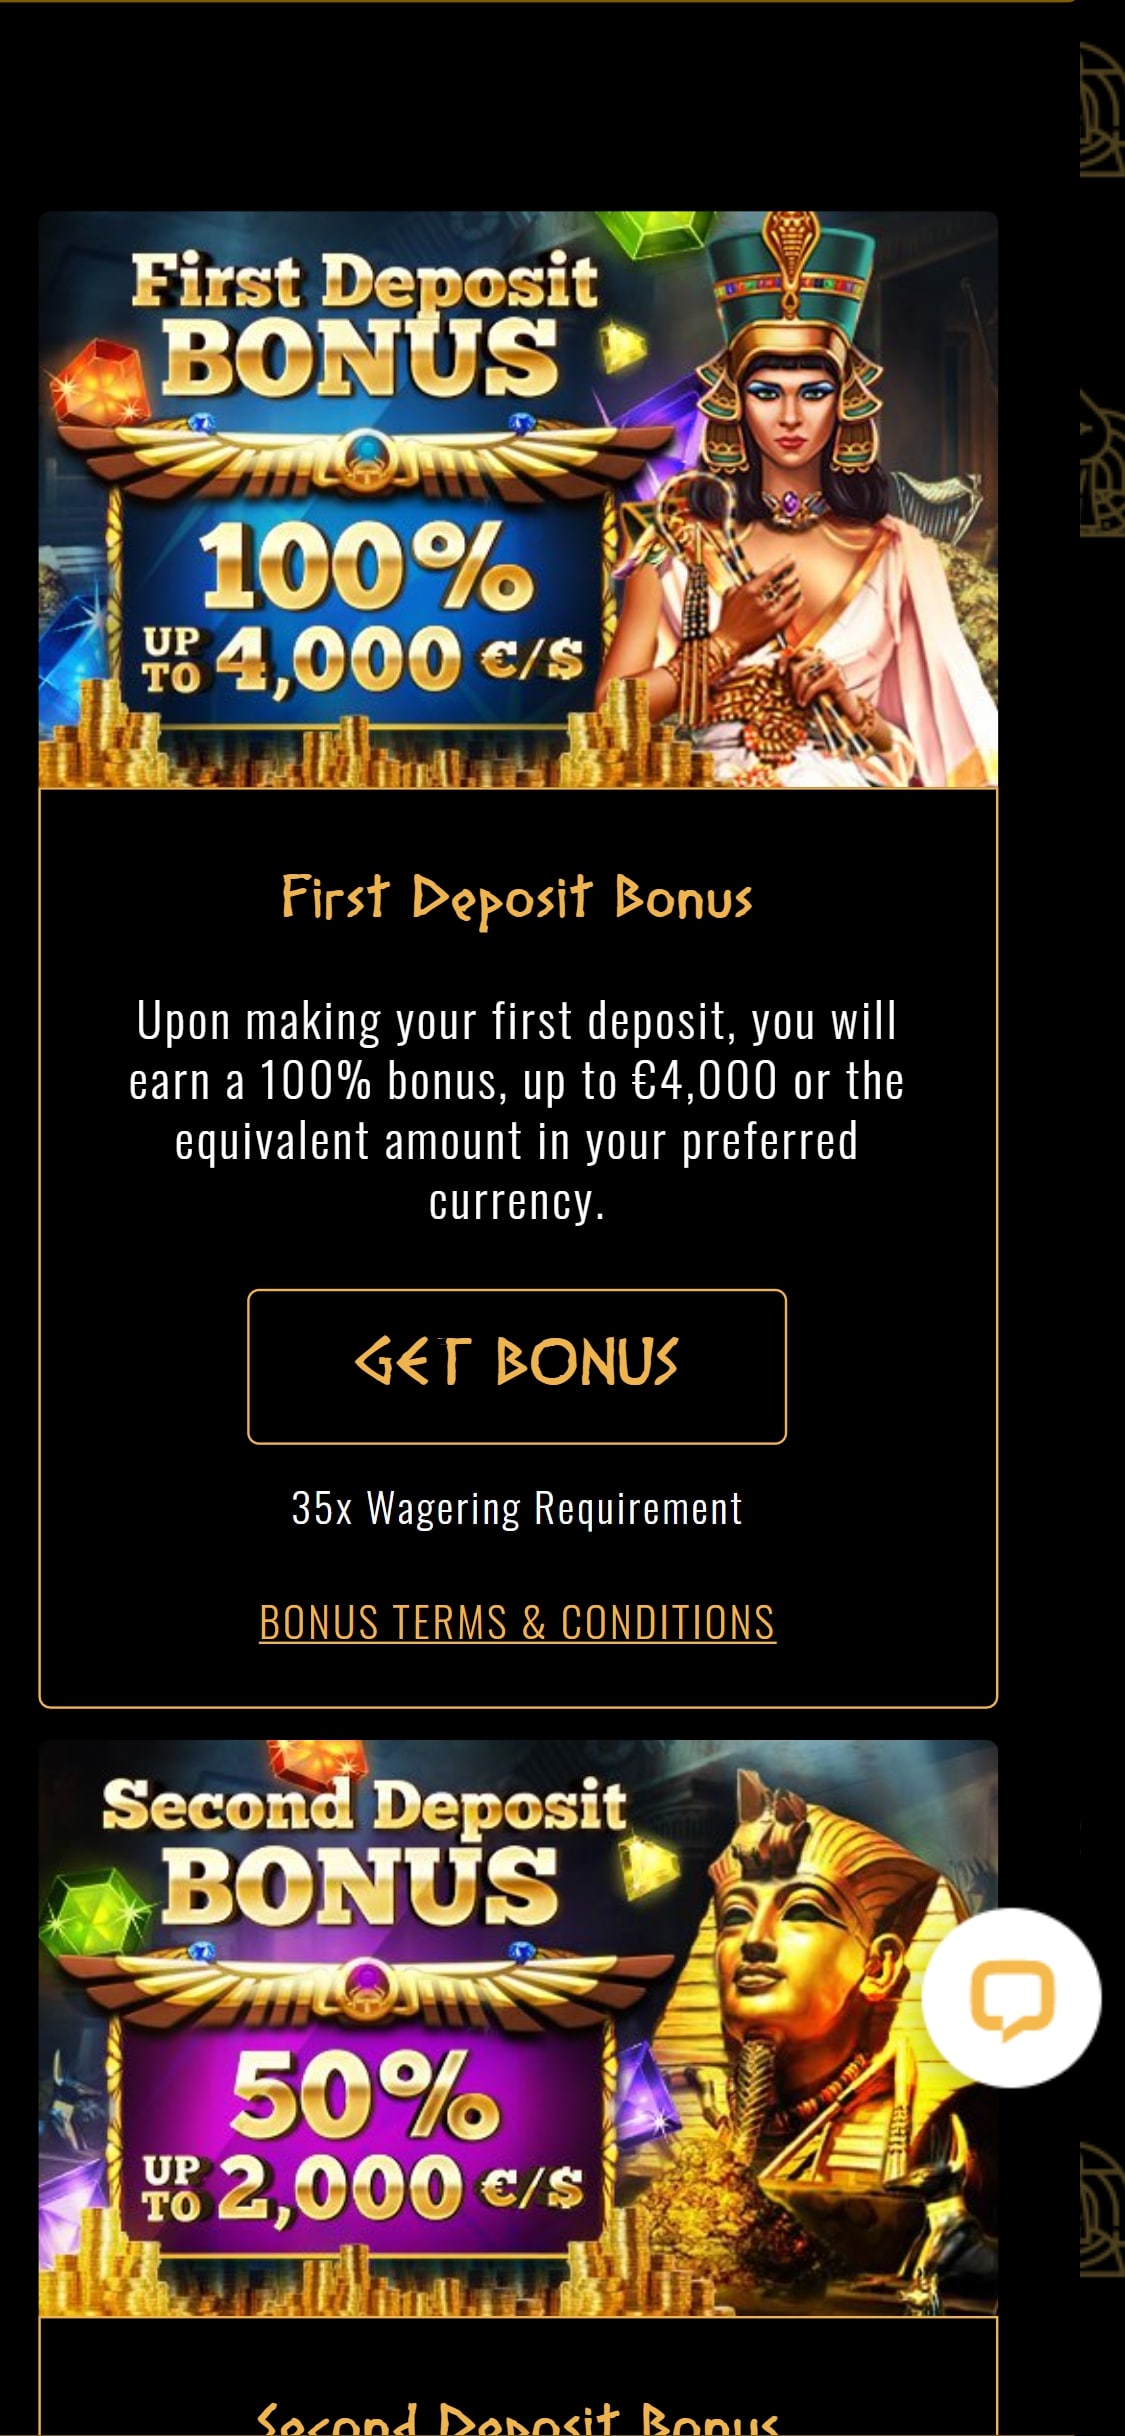 Cleopatra Casino Mobile No Deposit Bonus Review